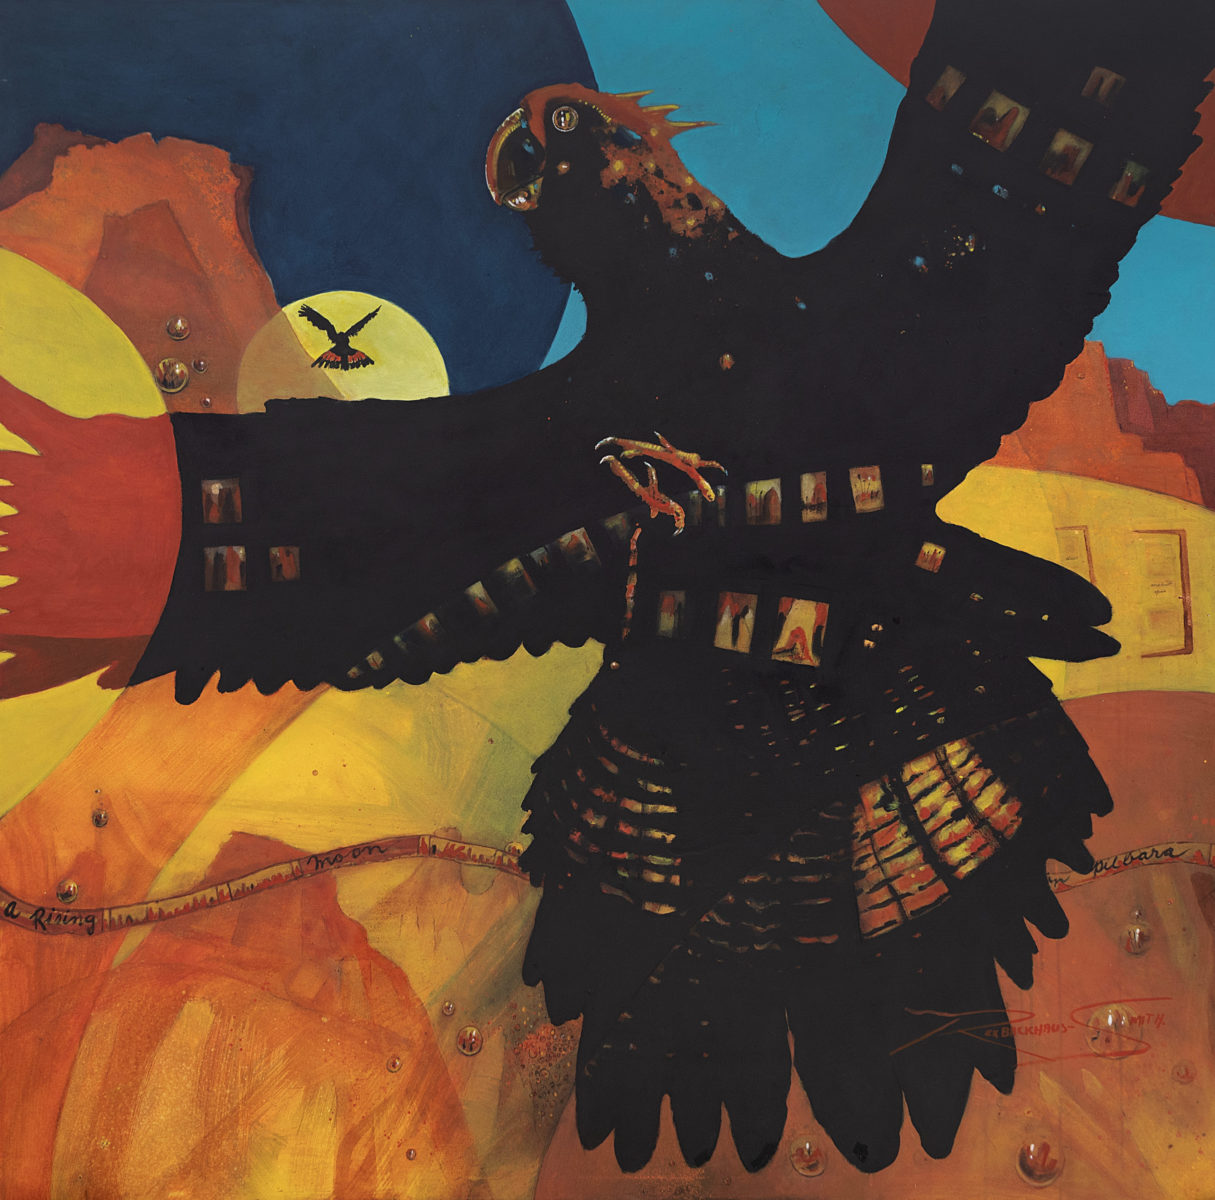 A rising moon - Pilbara | Rex Backhaus-Smith | mixed media on canvas | 150 x 150 cm | $15,000